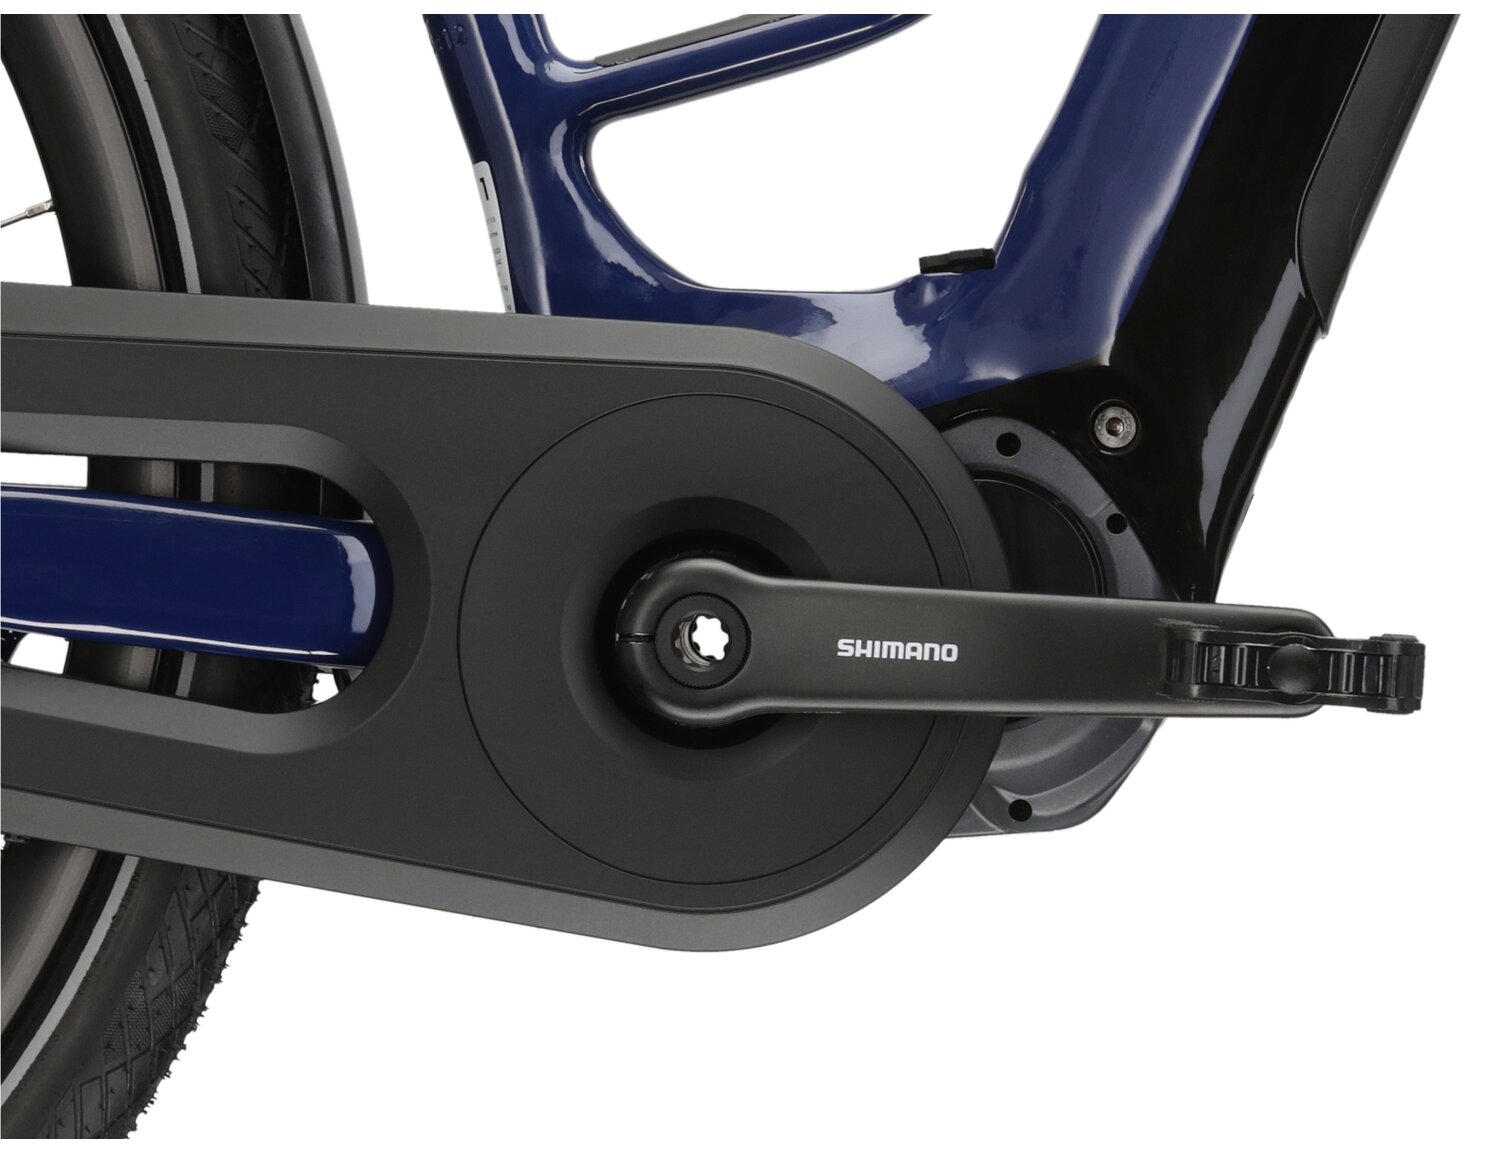 napęd Shimano STEPS E6110 w rowerze Sentio Hybrid 6.0 